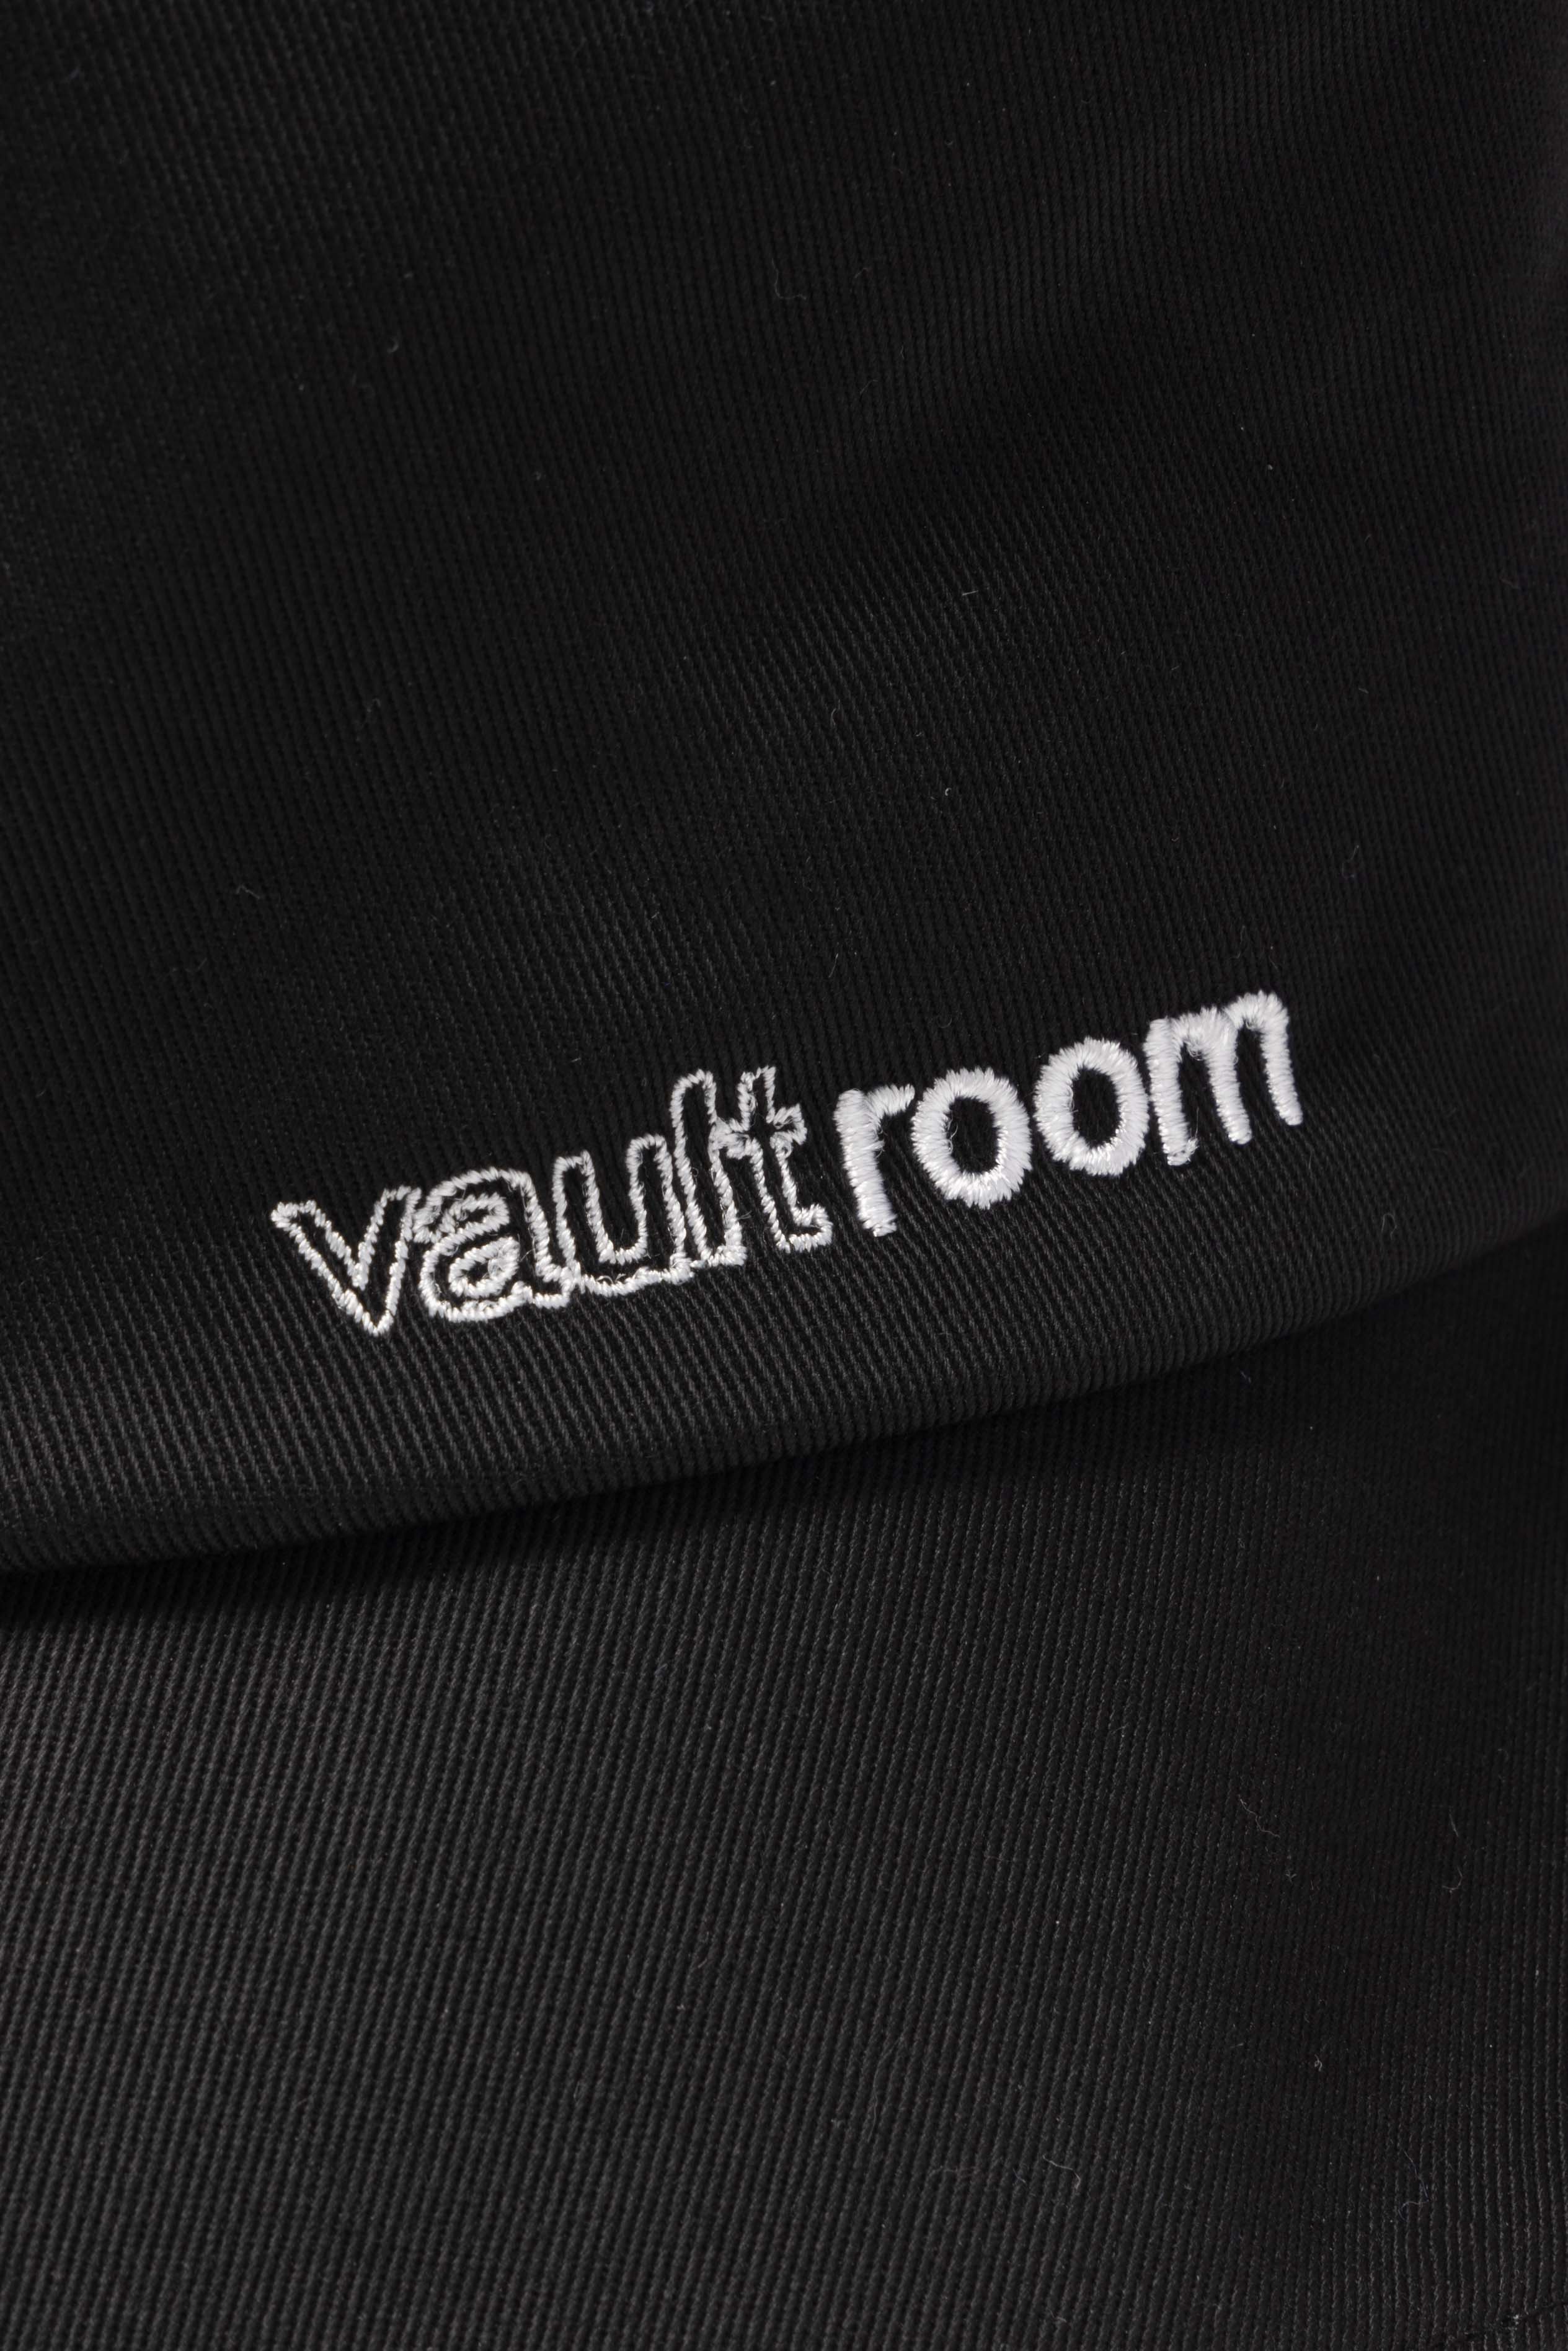 vaultroom ボルトルーム サイバーパンク cyberpunk